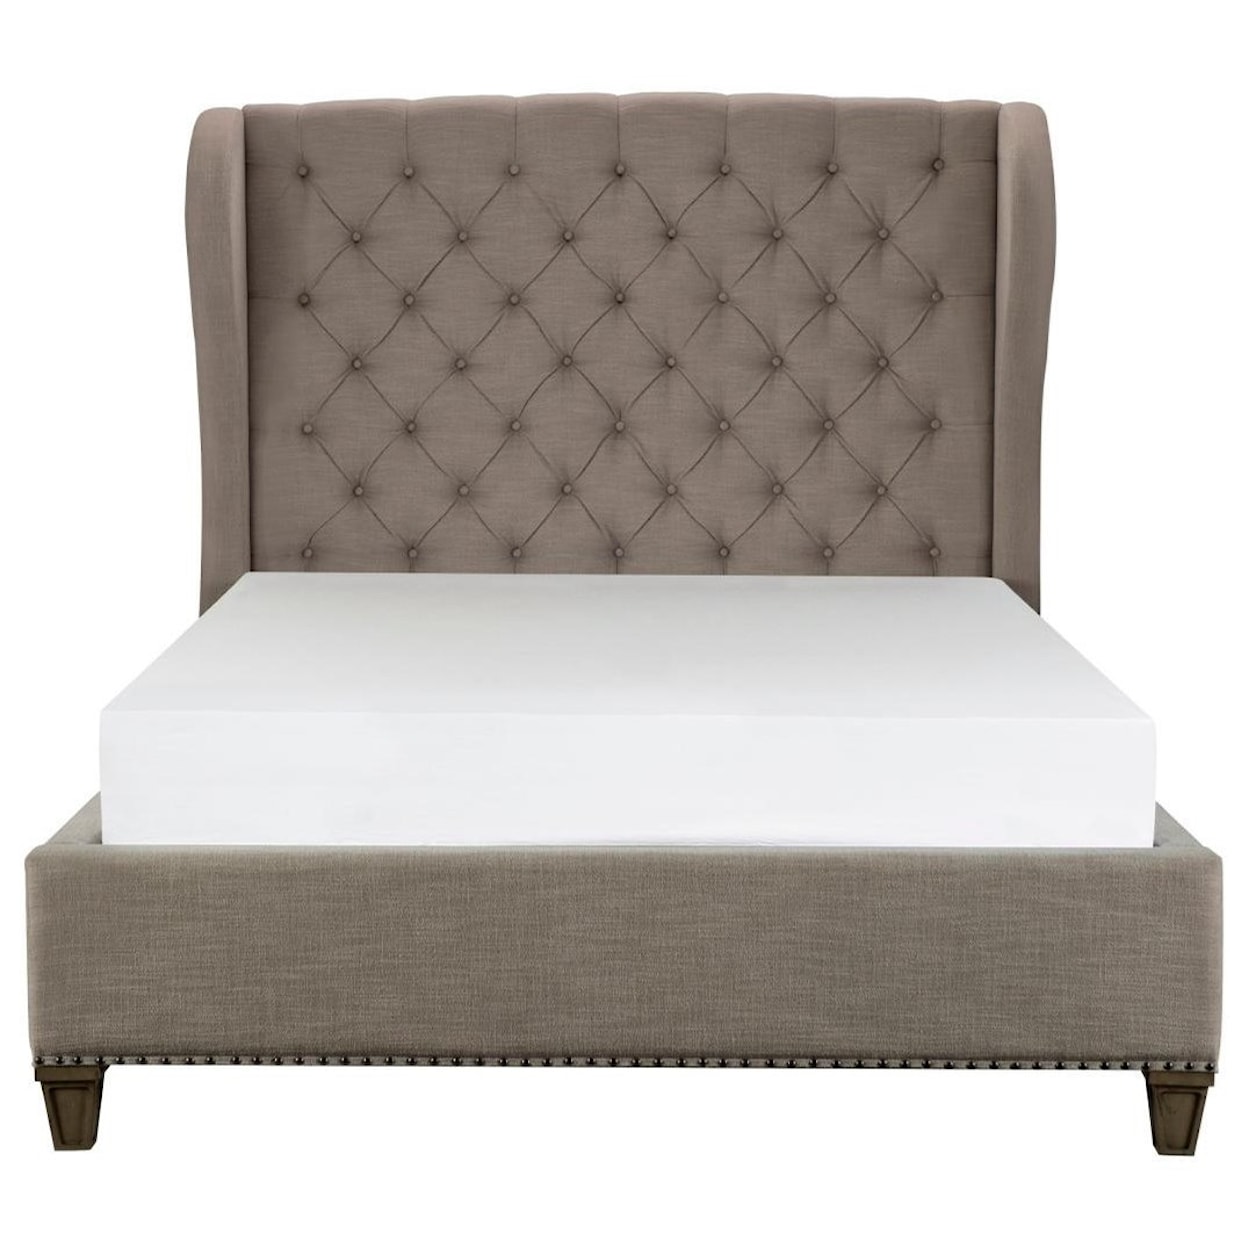 Homelegance Furniture Vermillion California King Upholstered Bed